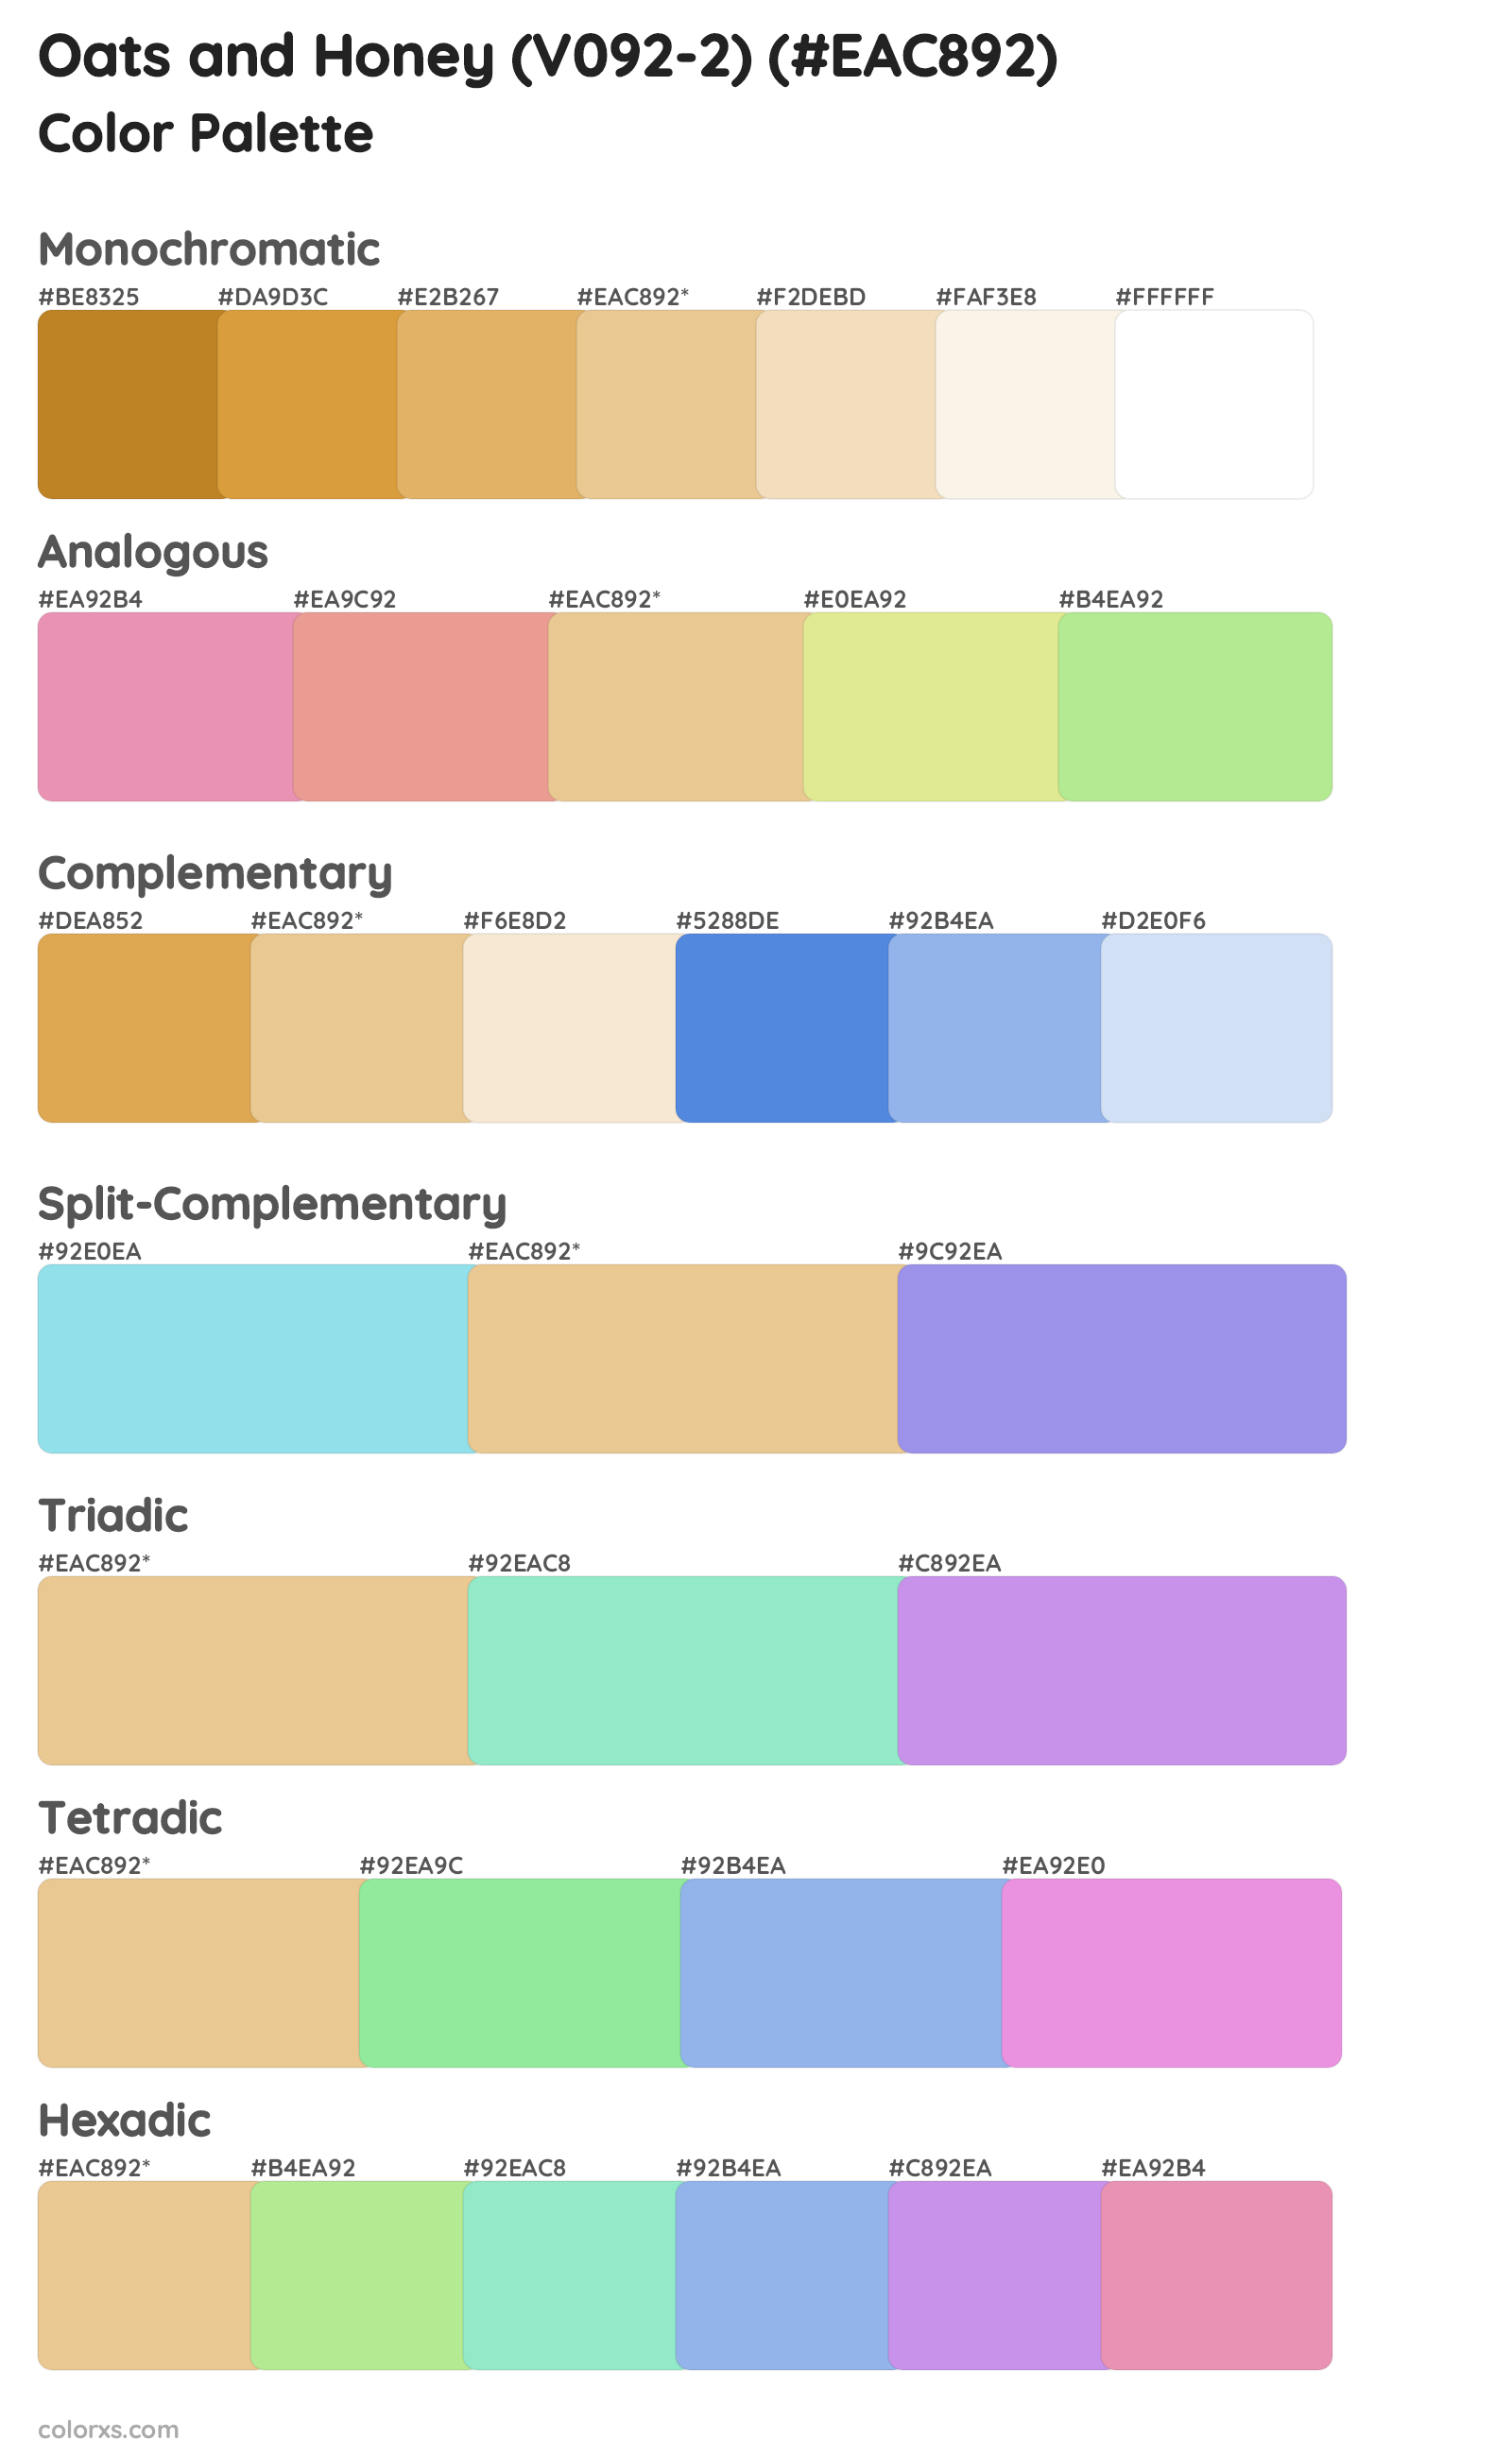 Oats and Honey (V092-2) Color Scheme Palettes